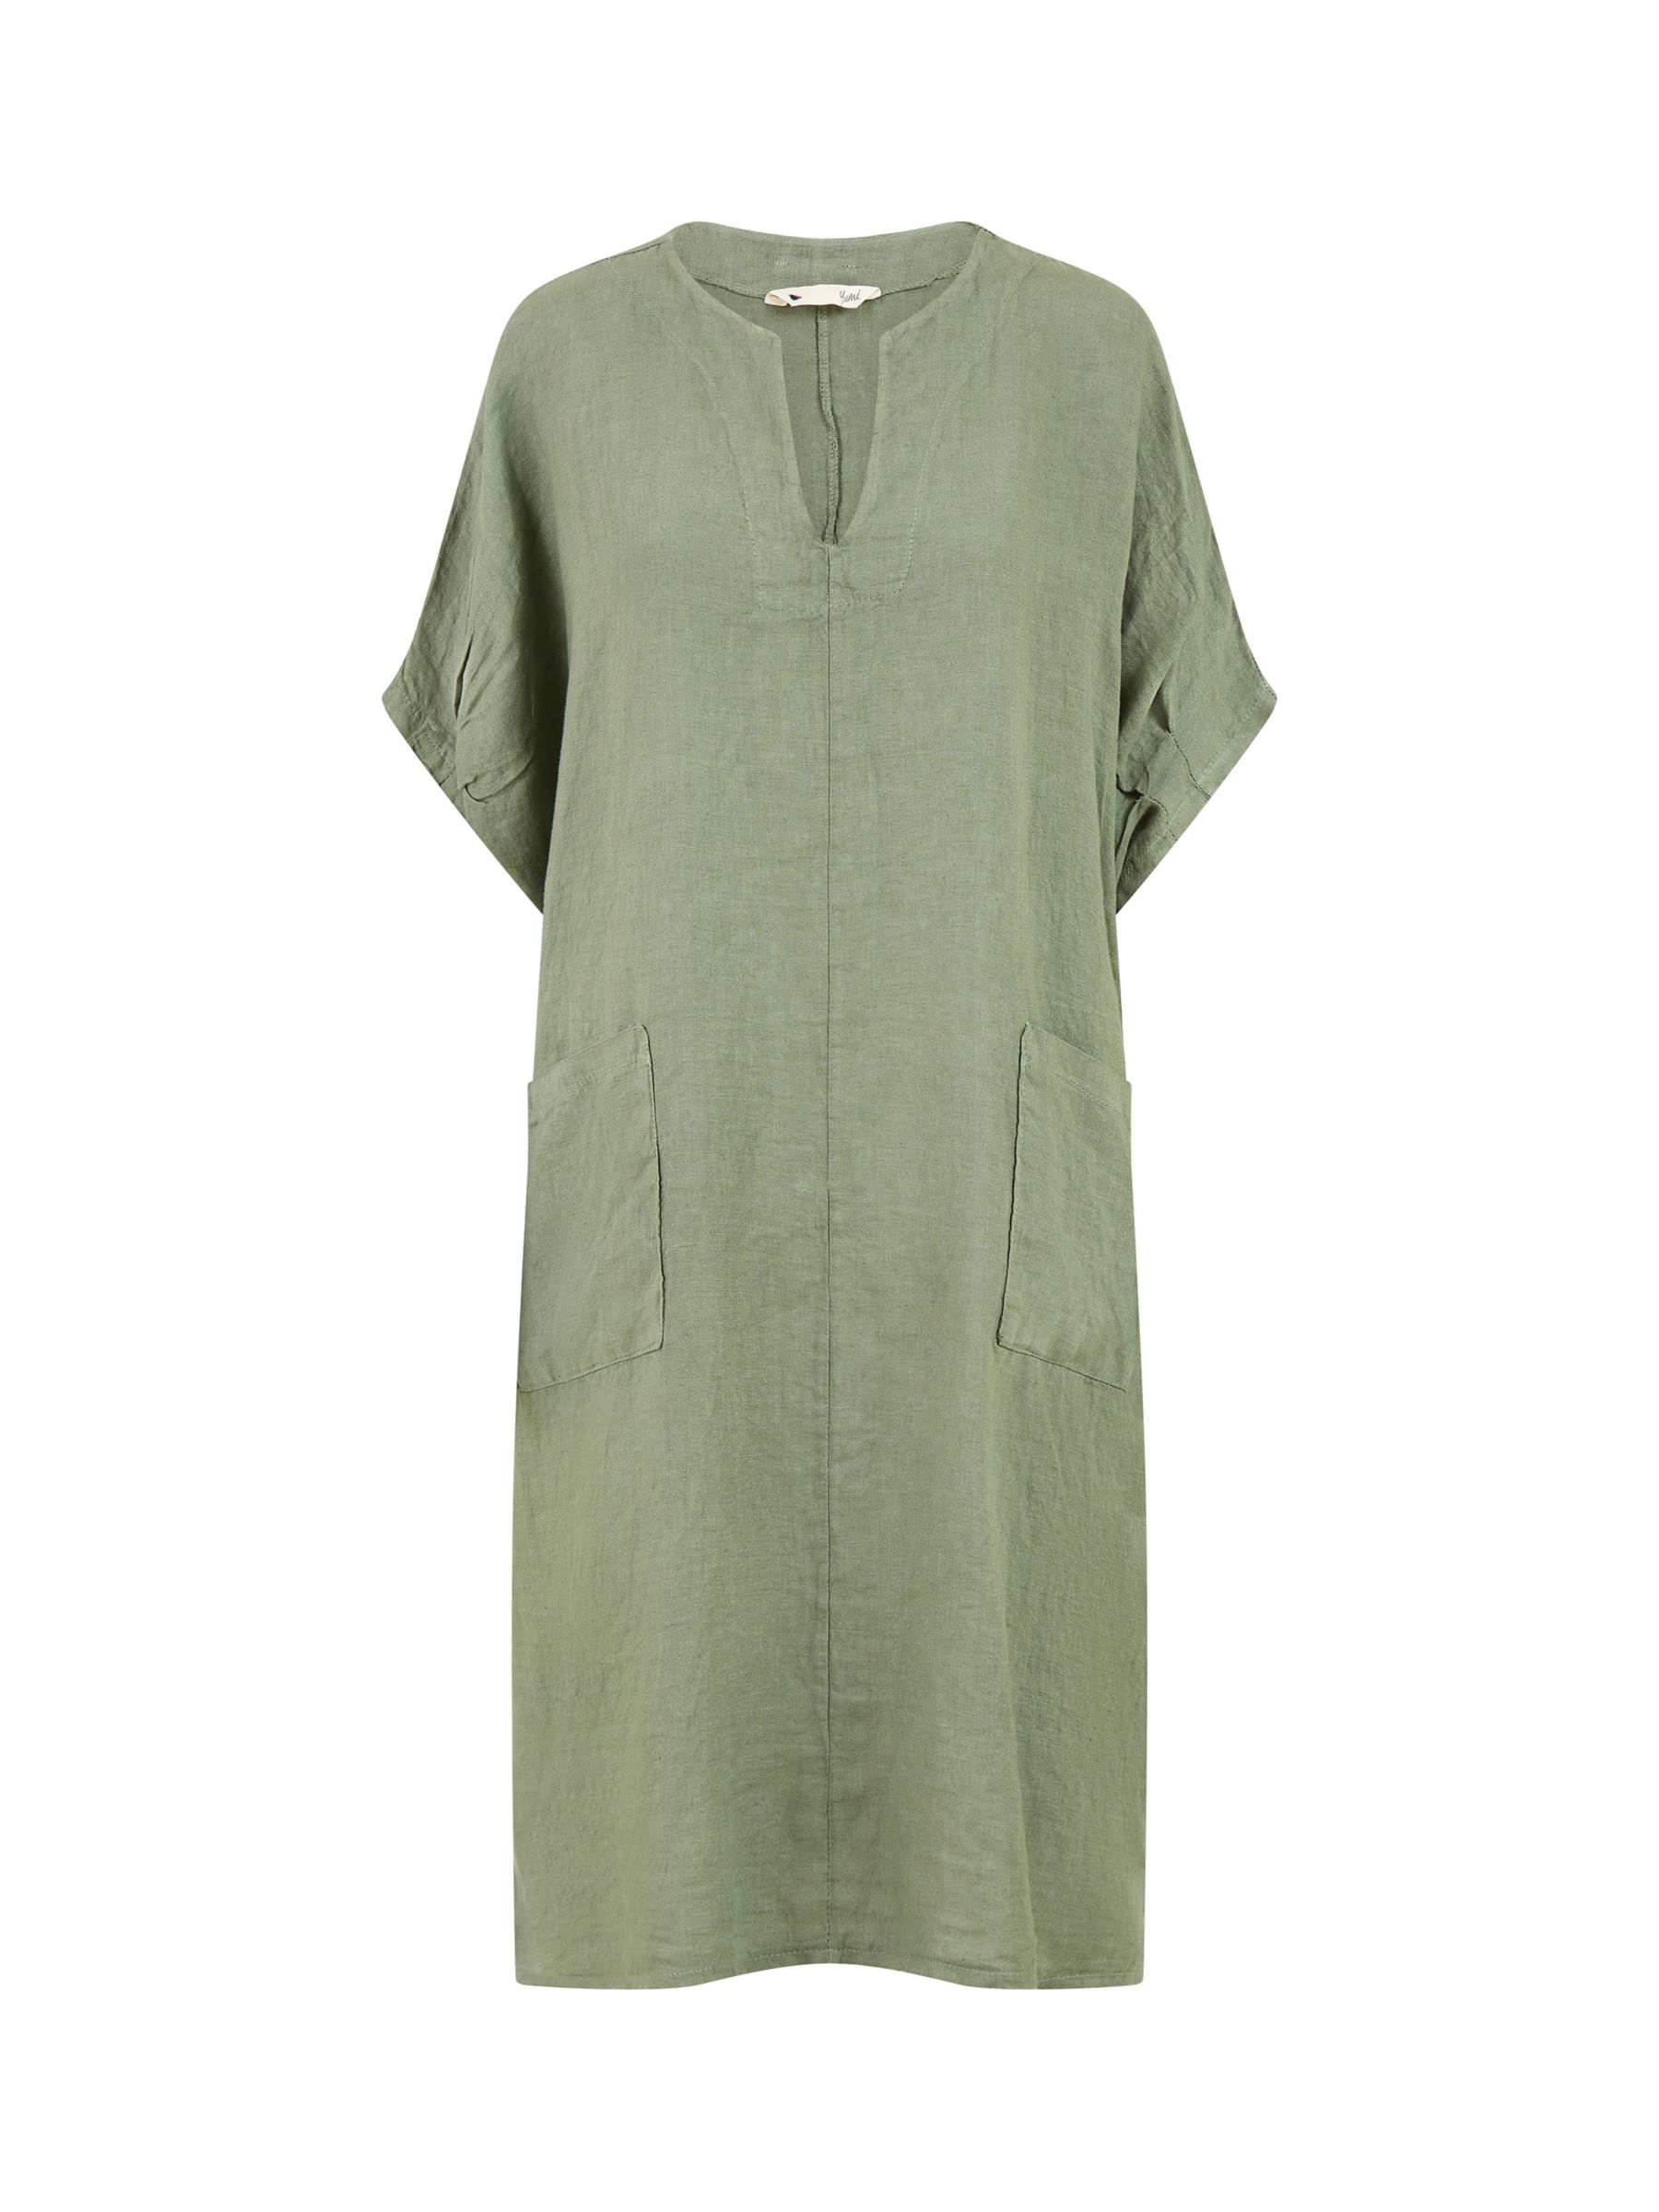 Yumi Italian Linen Tunic Dress, Khaki, S